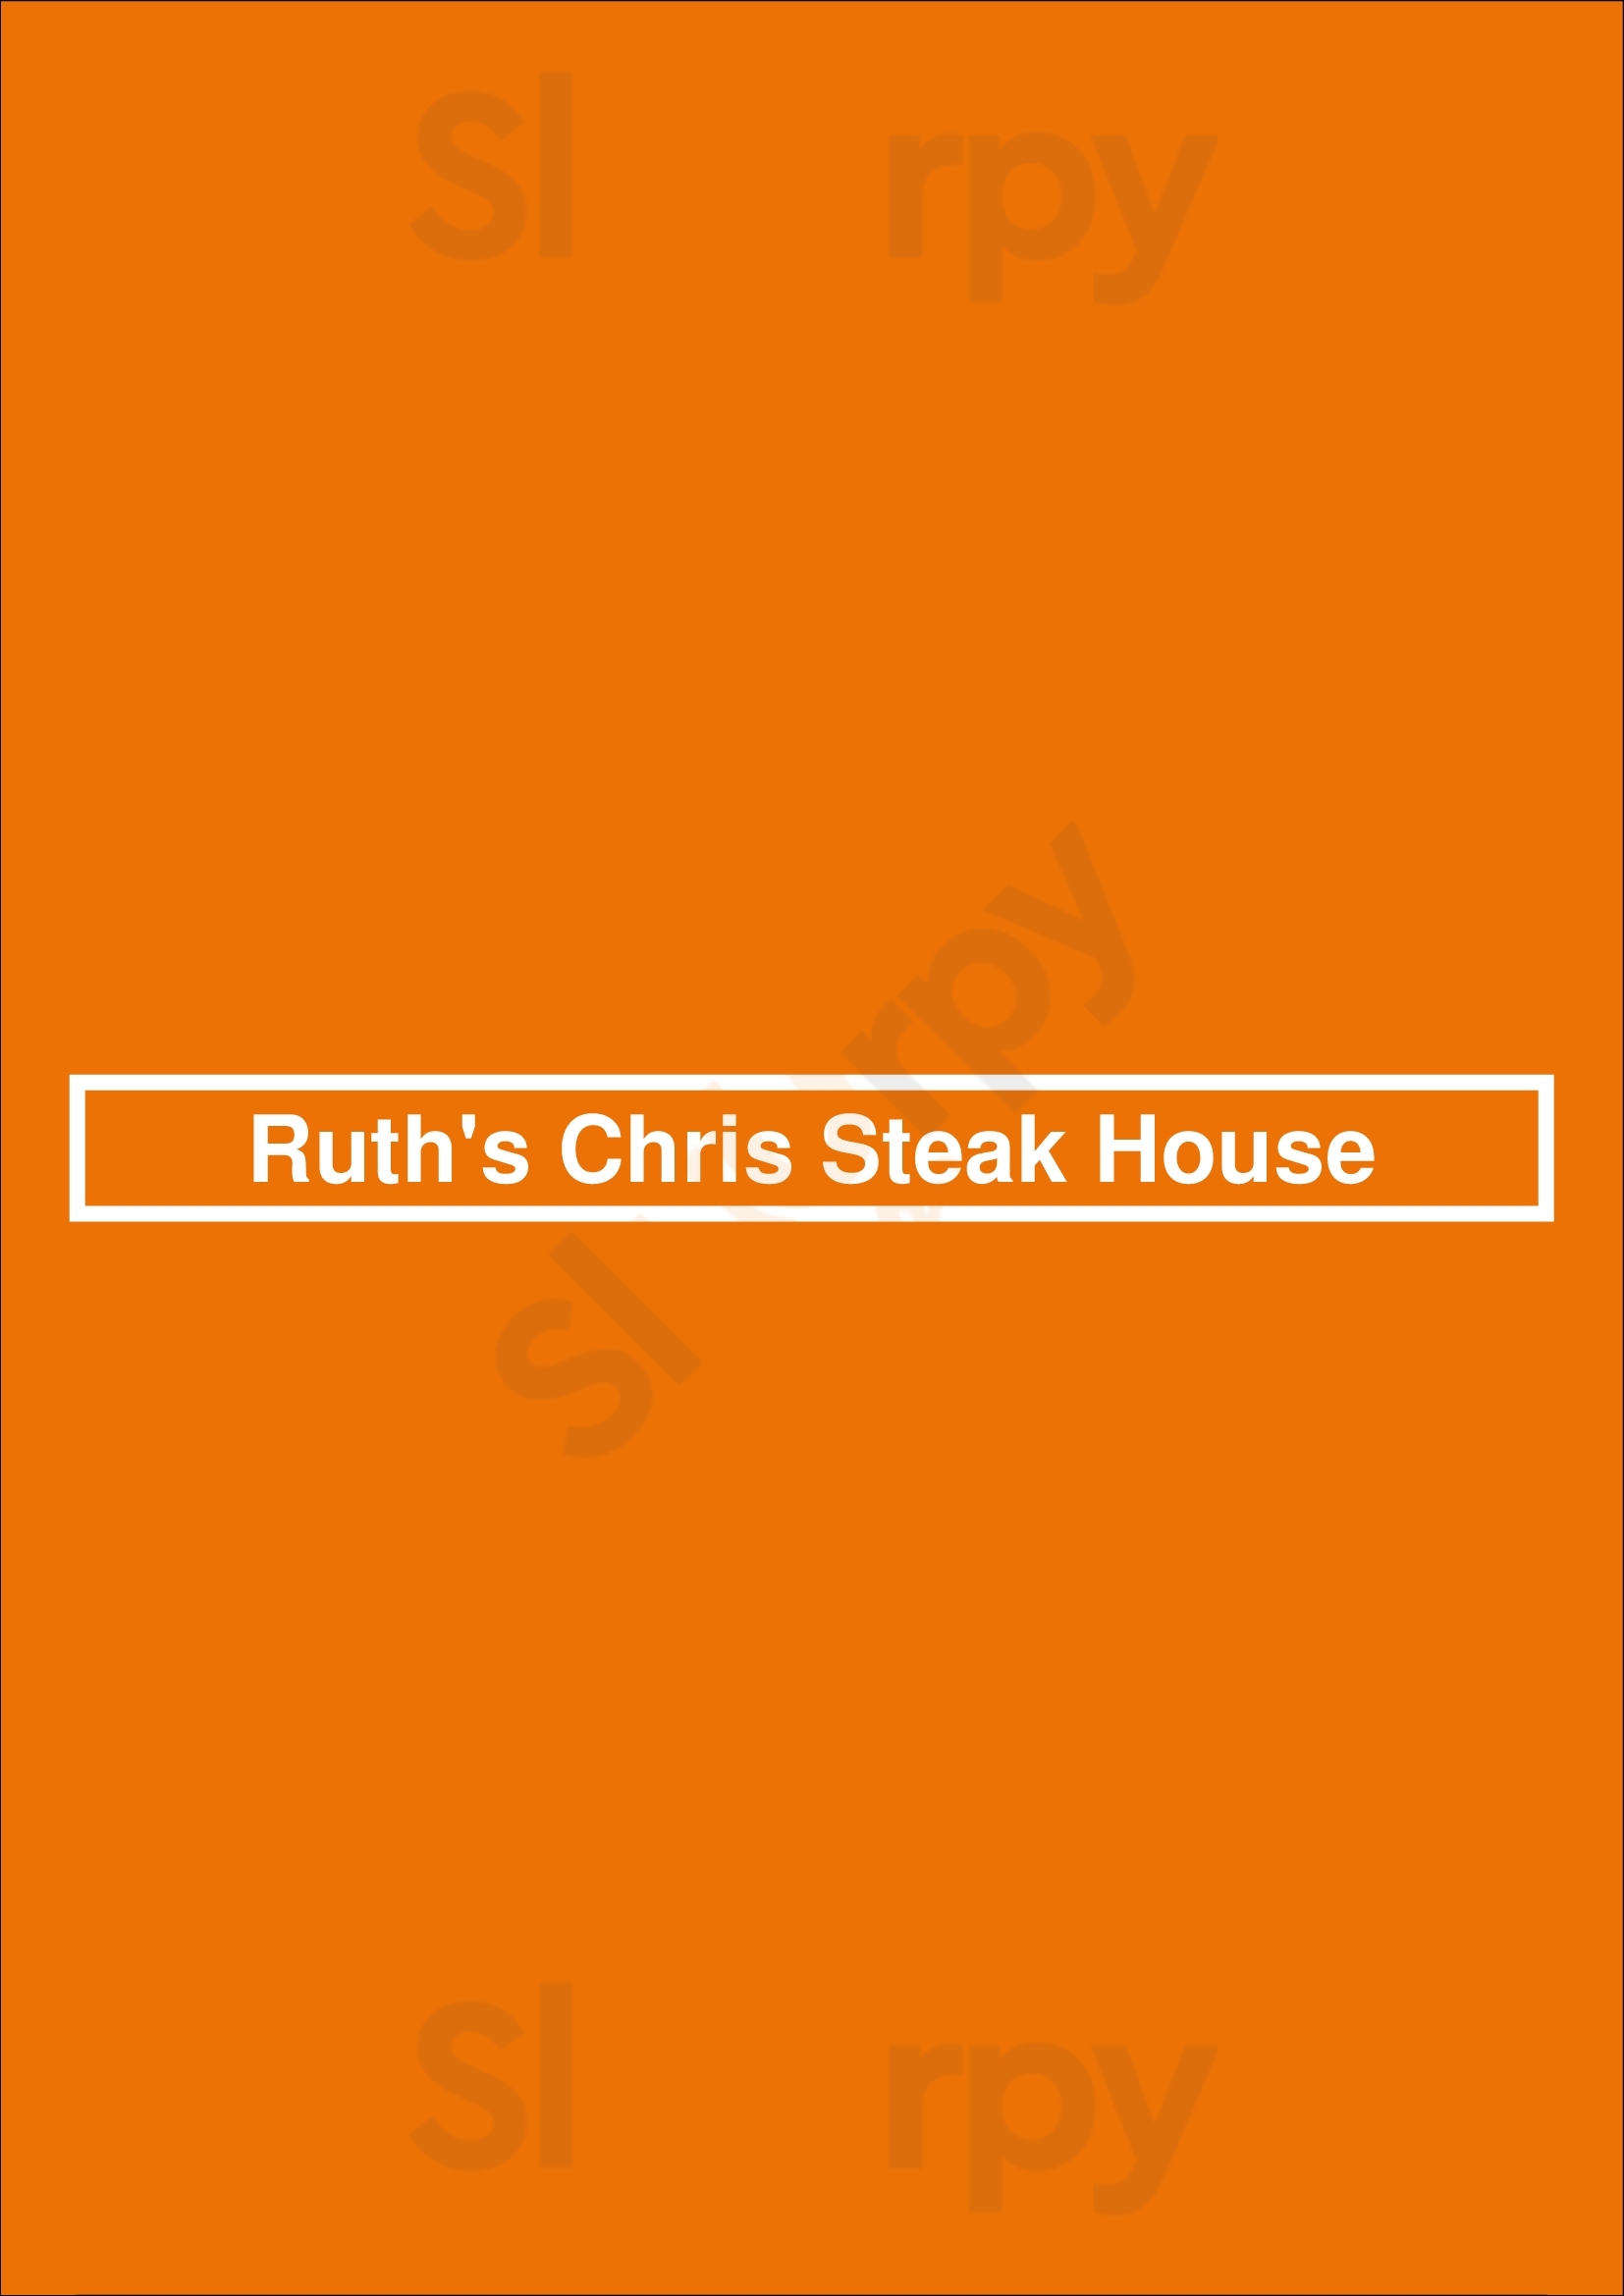 Ruth's Chris Steak House Mobile Menu - 1